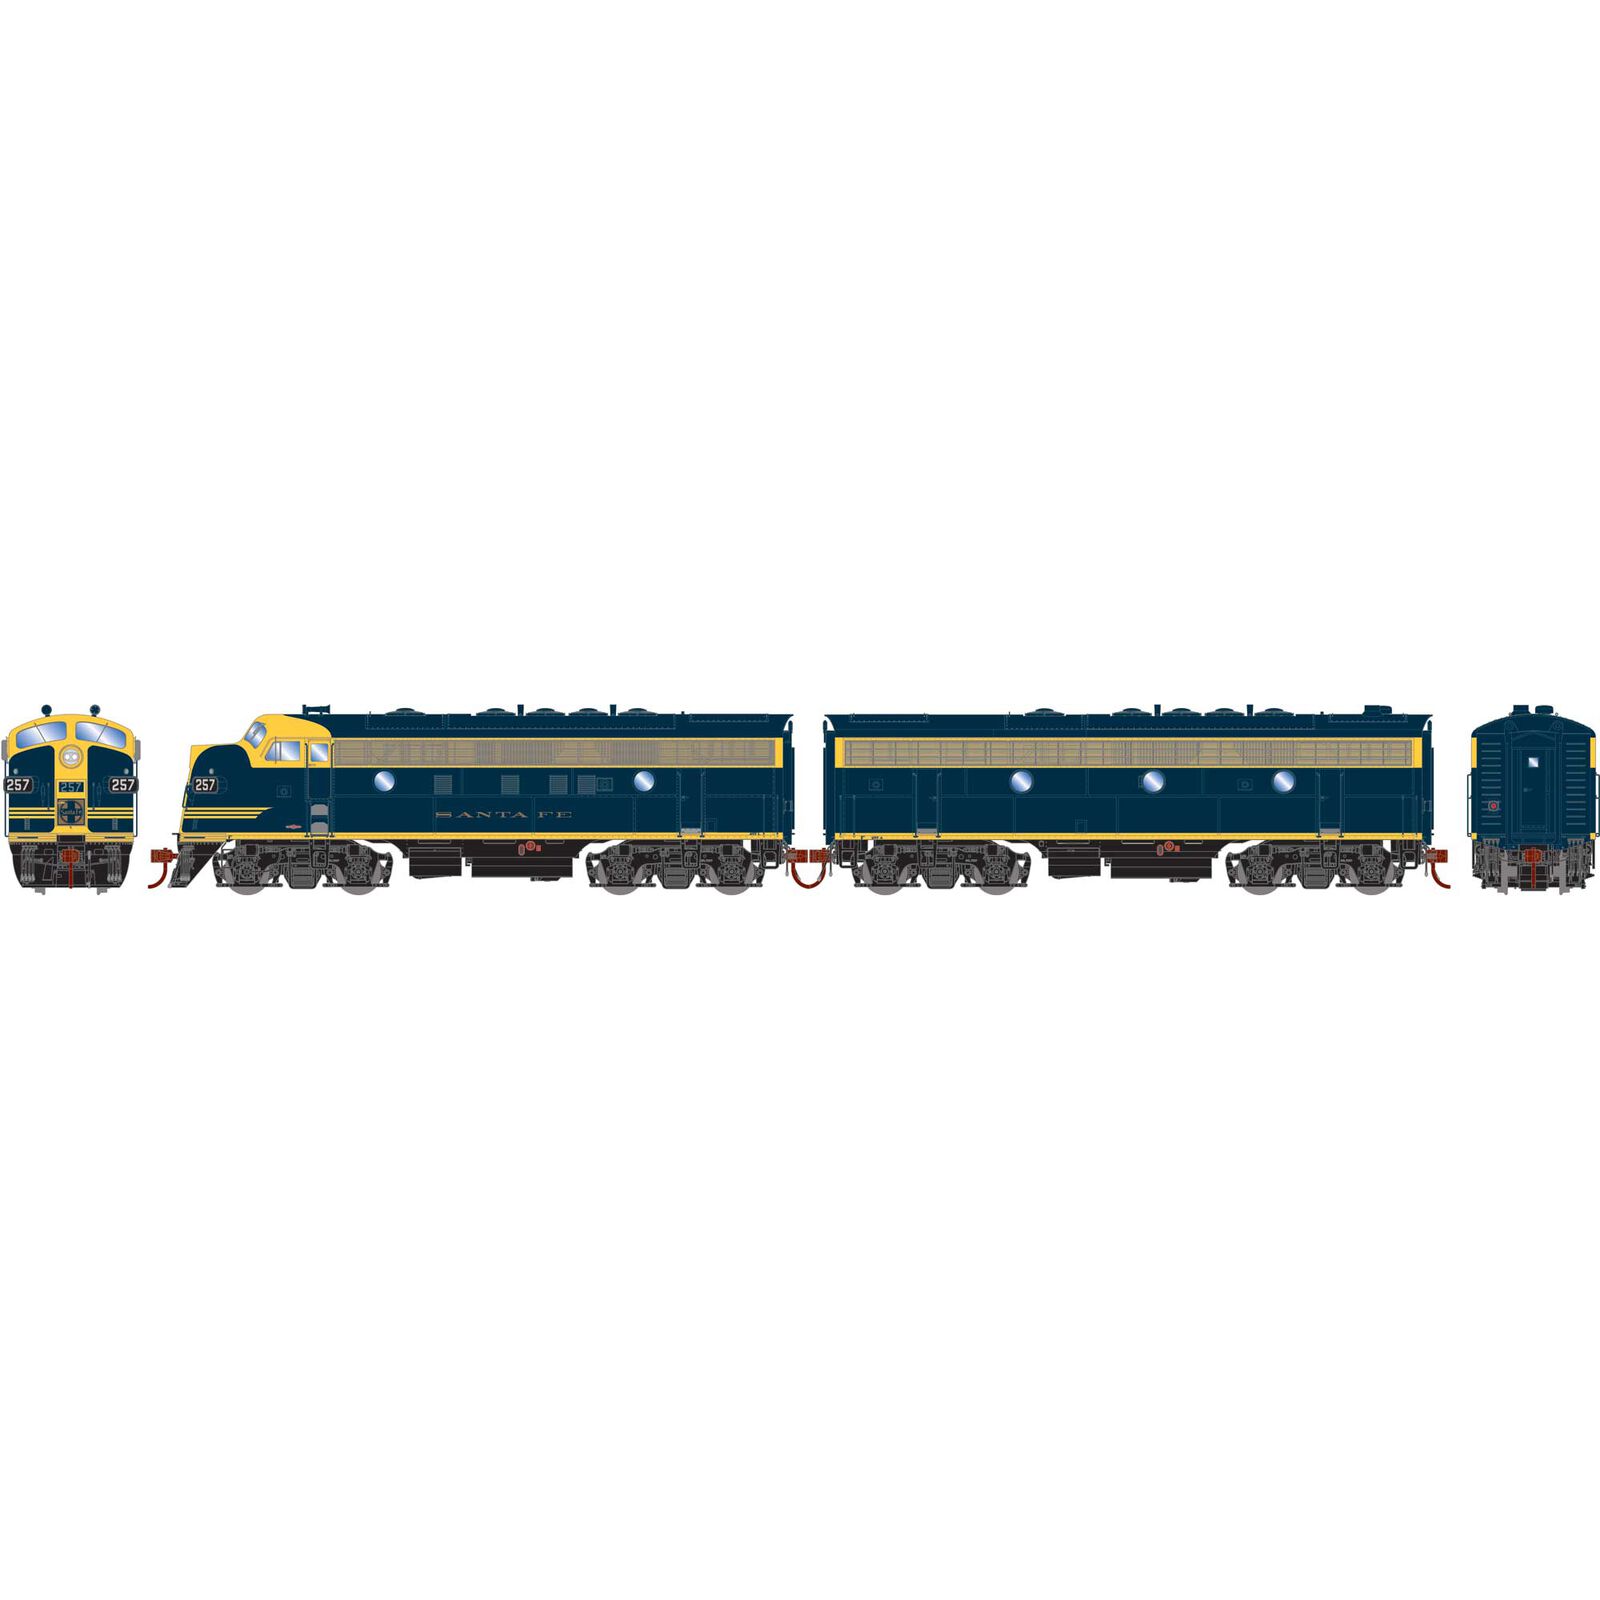 HO F7A / F7B Locomotive Set with DCC & Sound, ATSF #257L, #257A